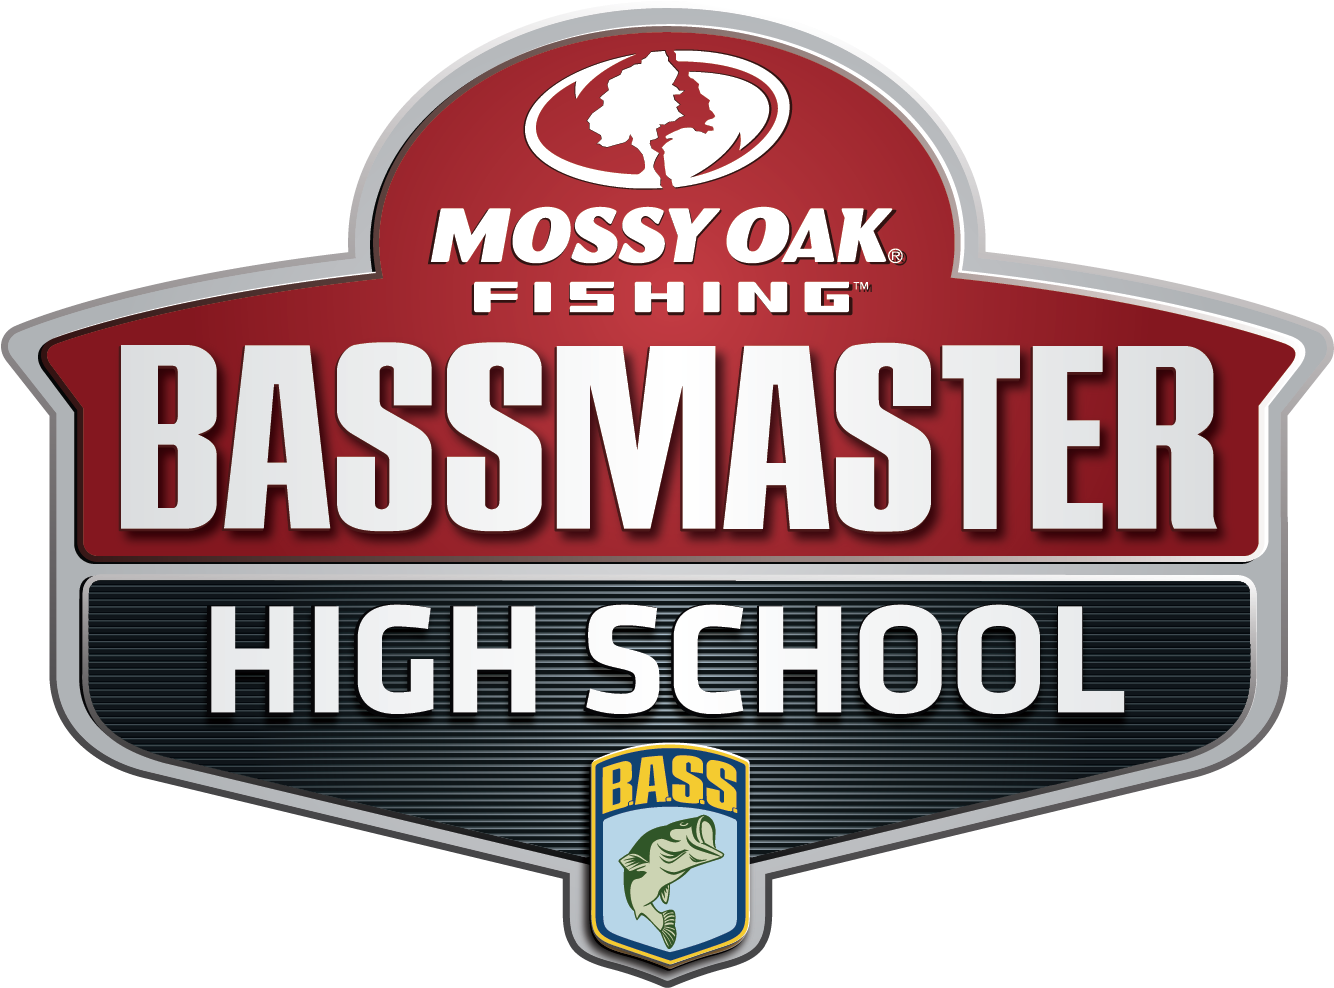 Mossy Oak Fishing Bassmaster High School Series Png Image